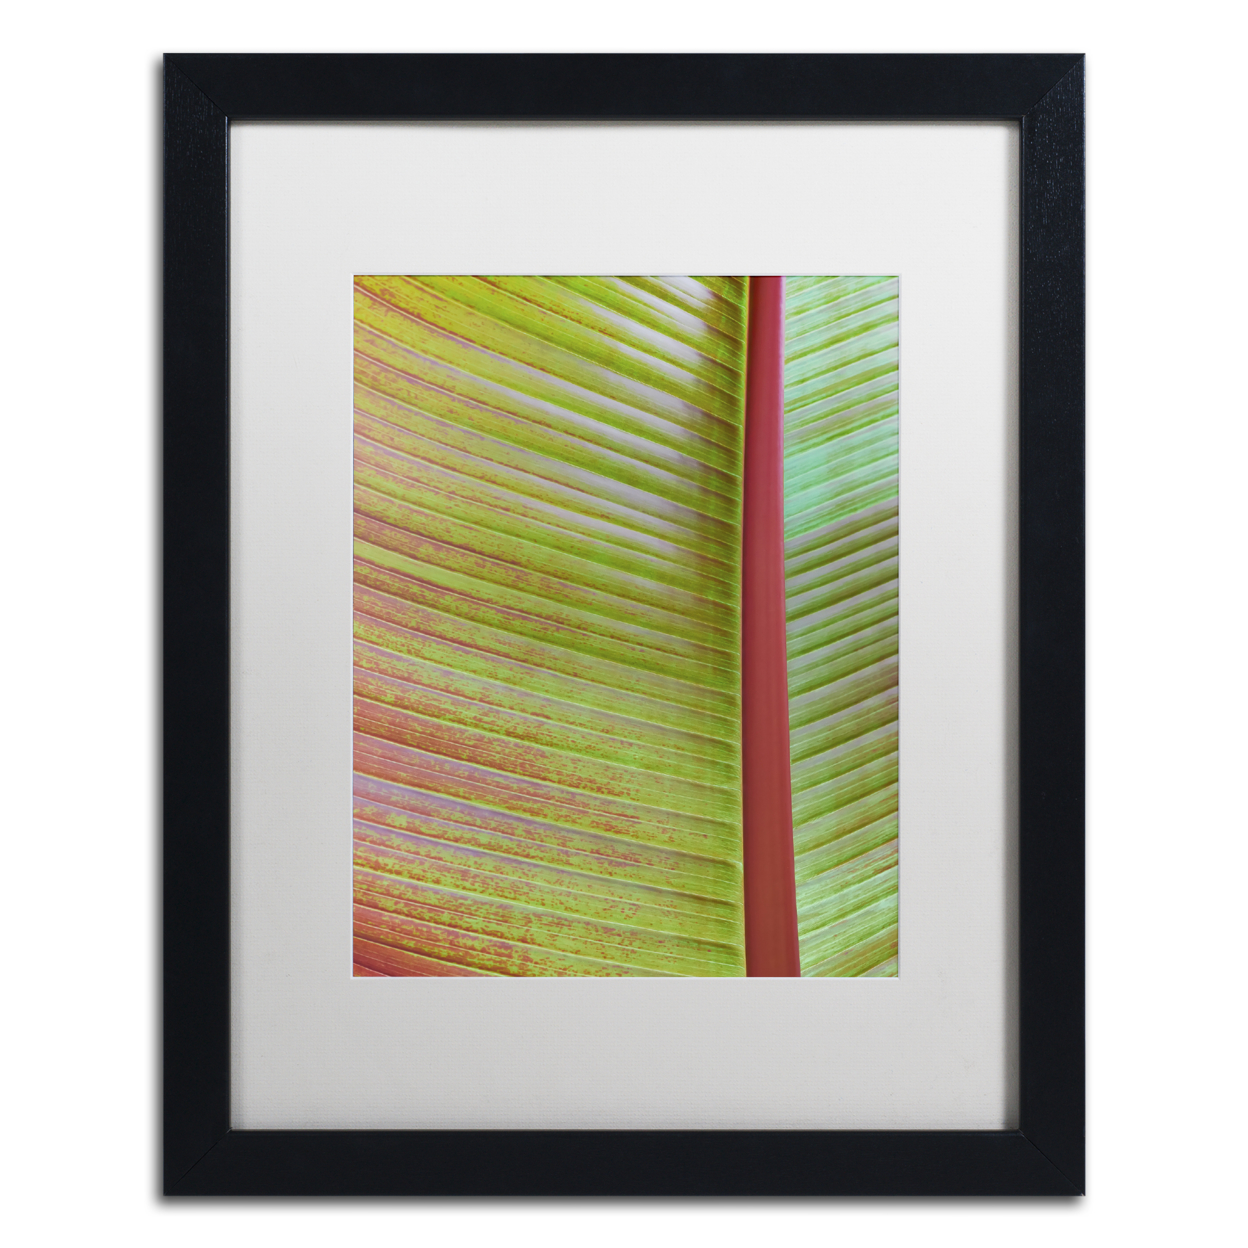 Cora Niele 'Leaf Texture VI' Black Wooden Framed Art 18 X 22 Inches